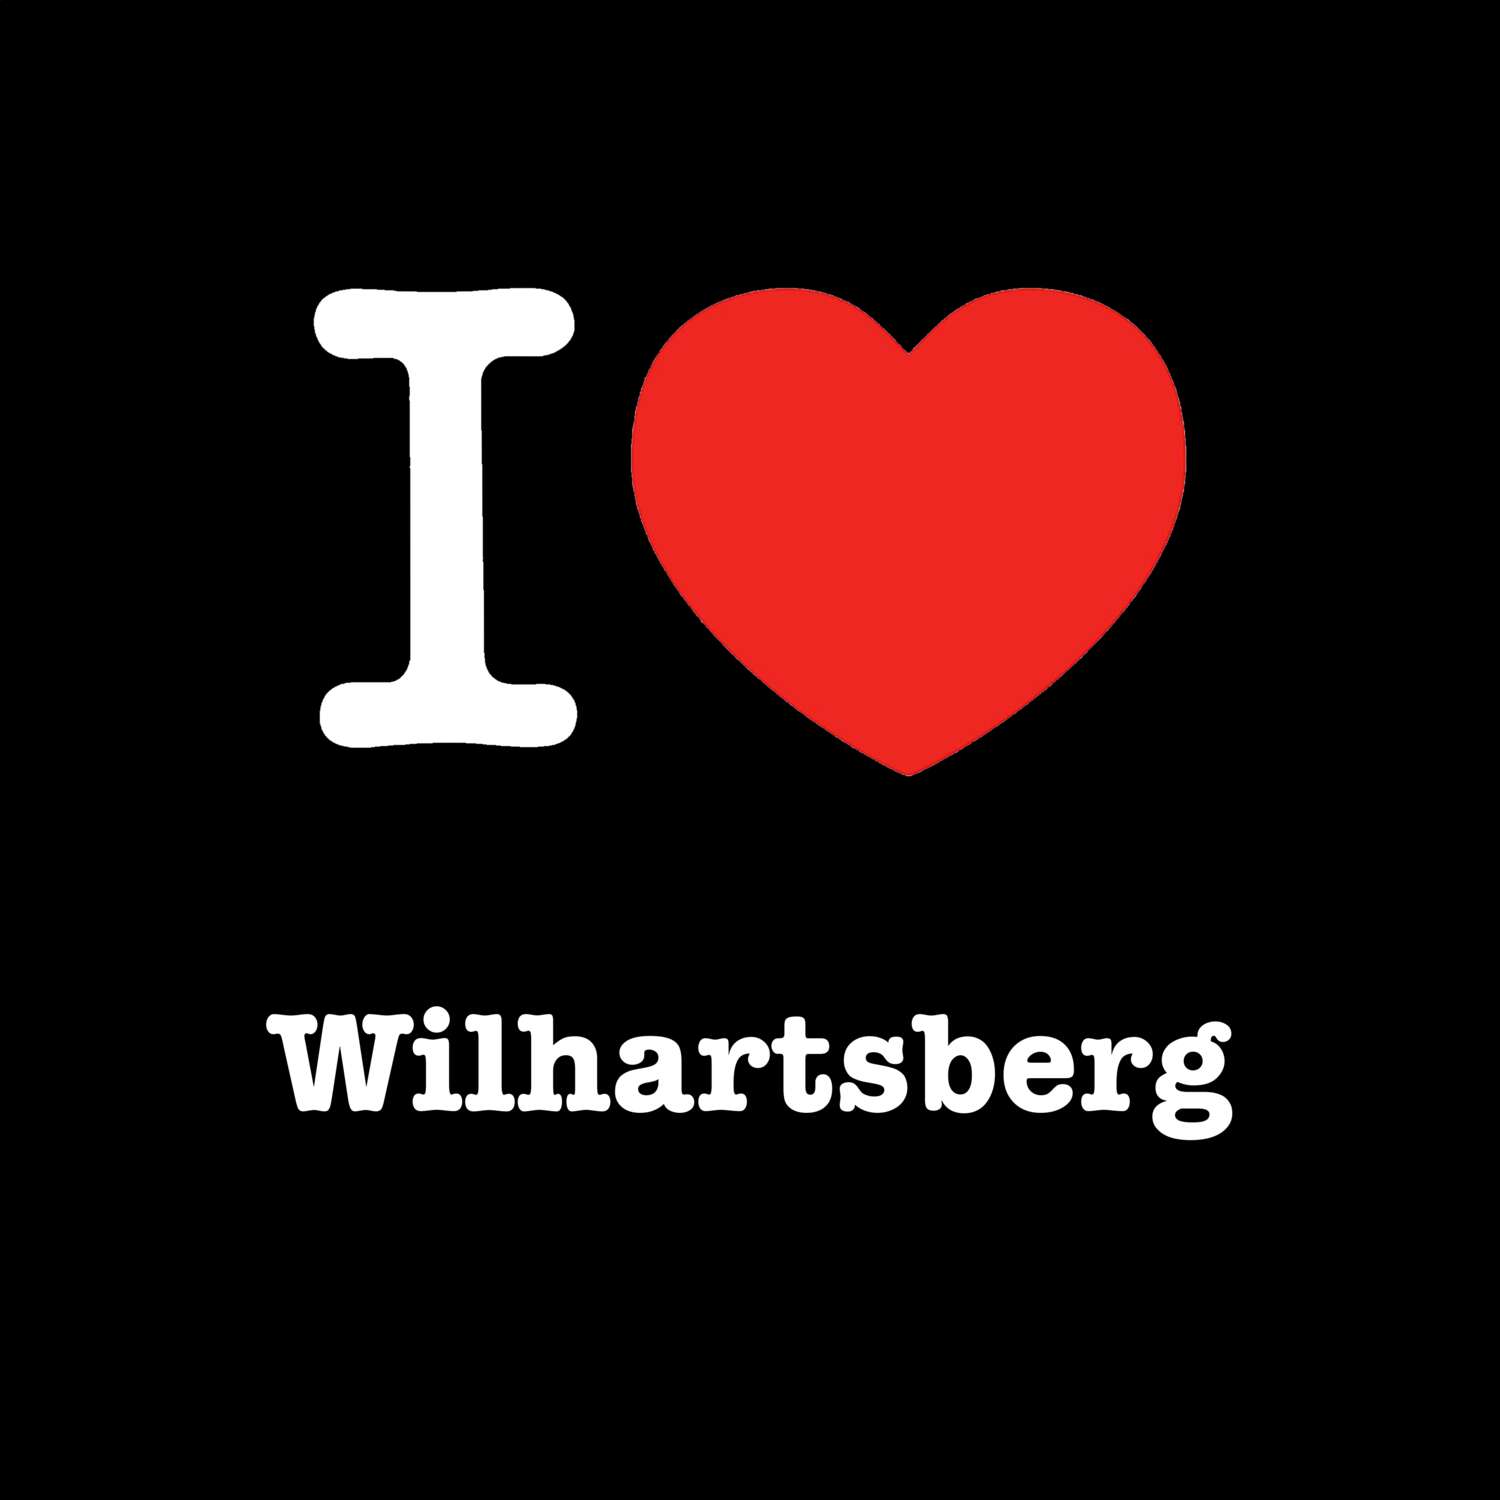 Wilhartsberg T-Shirt »I love«